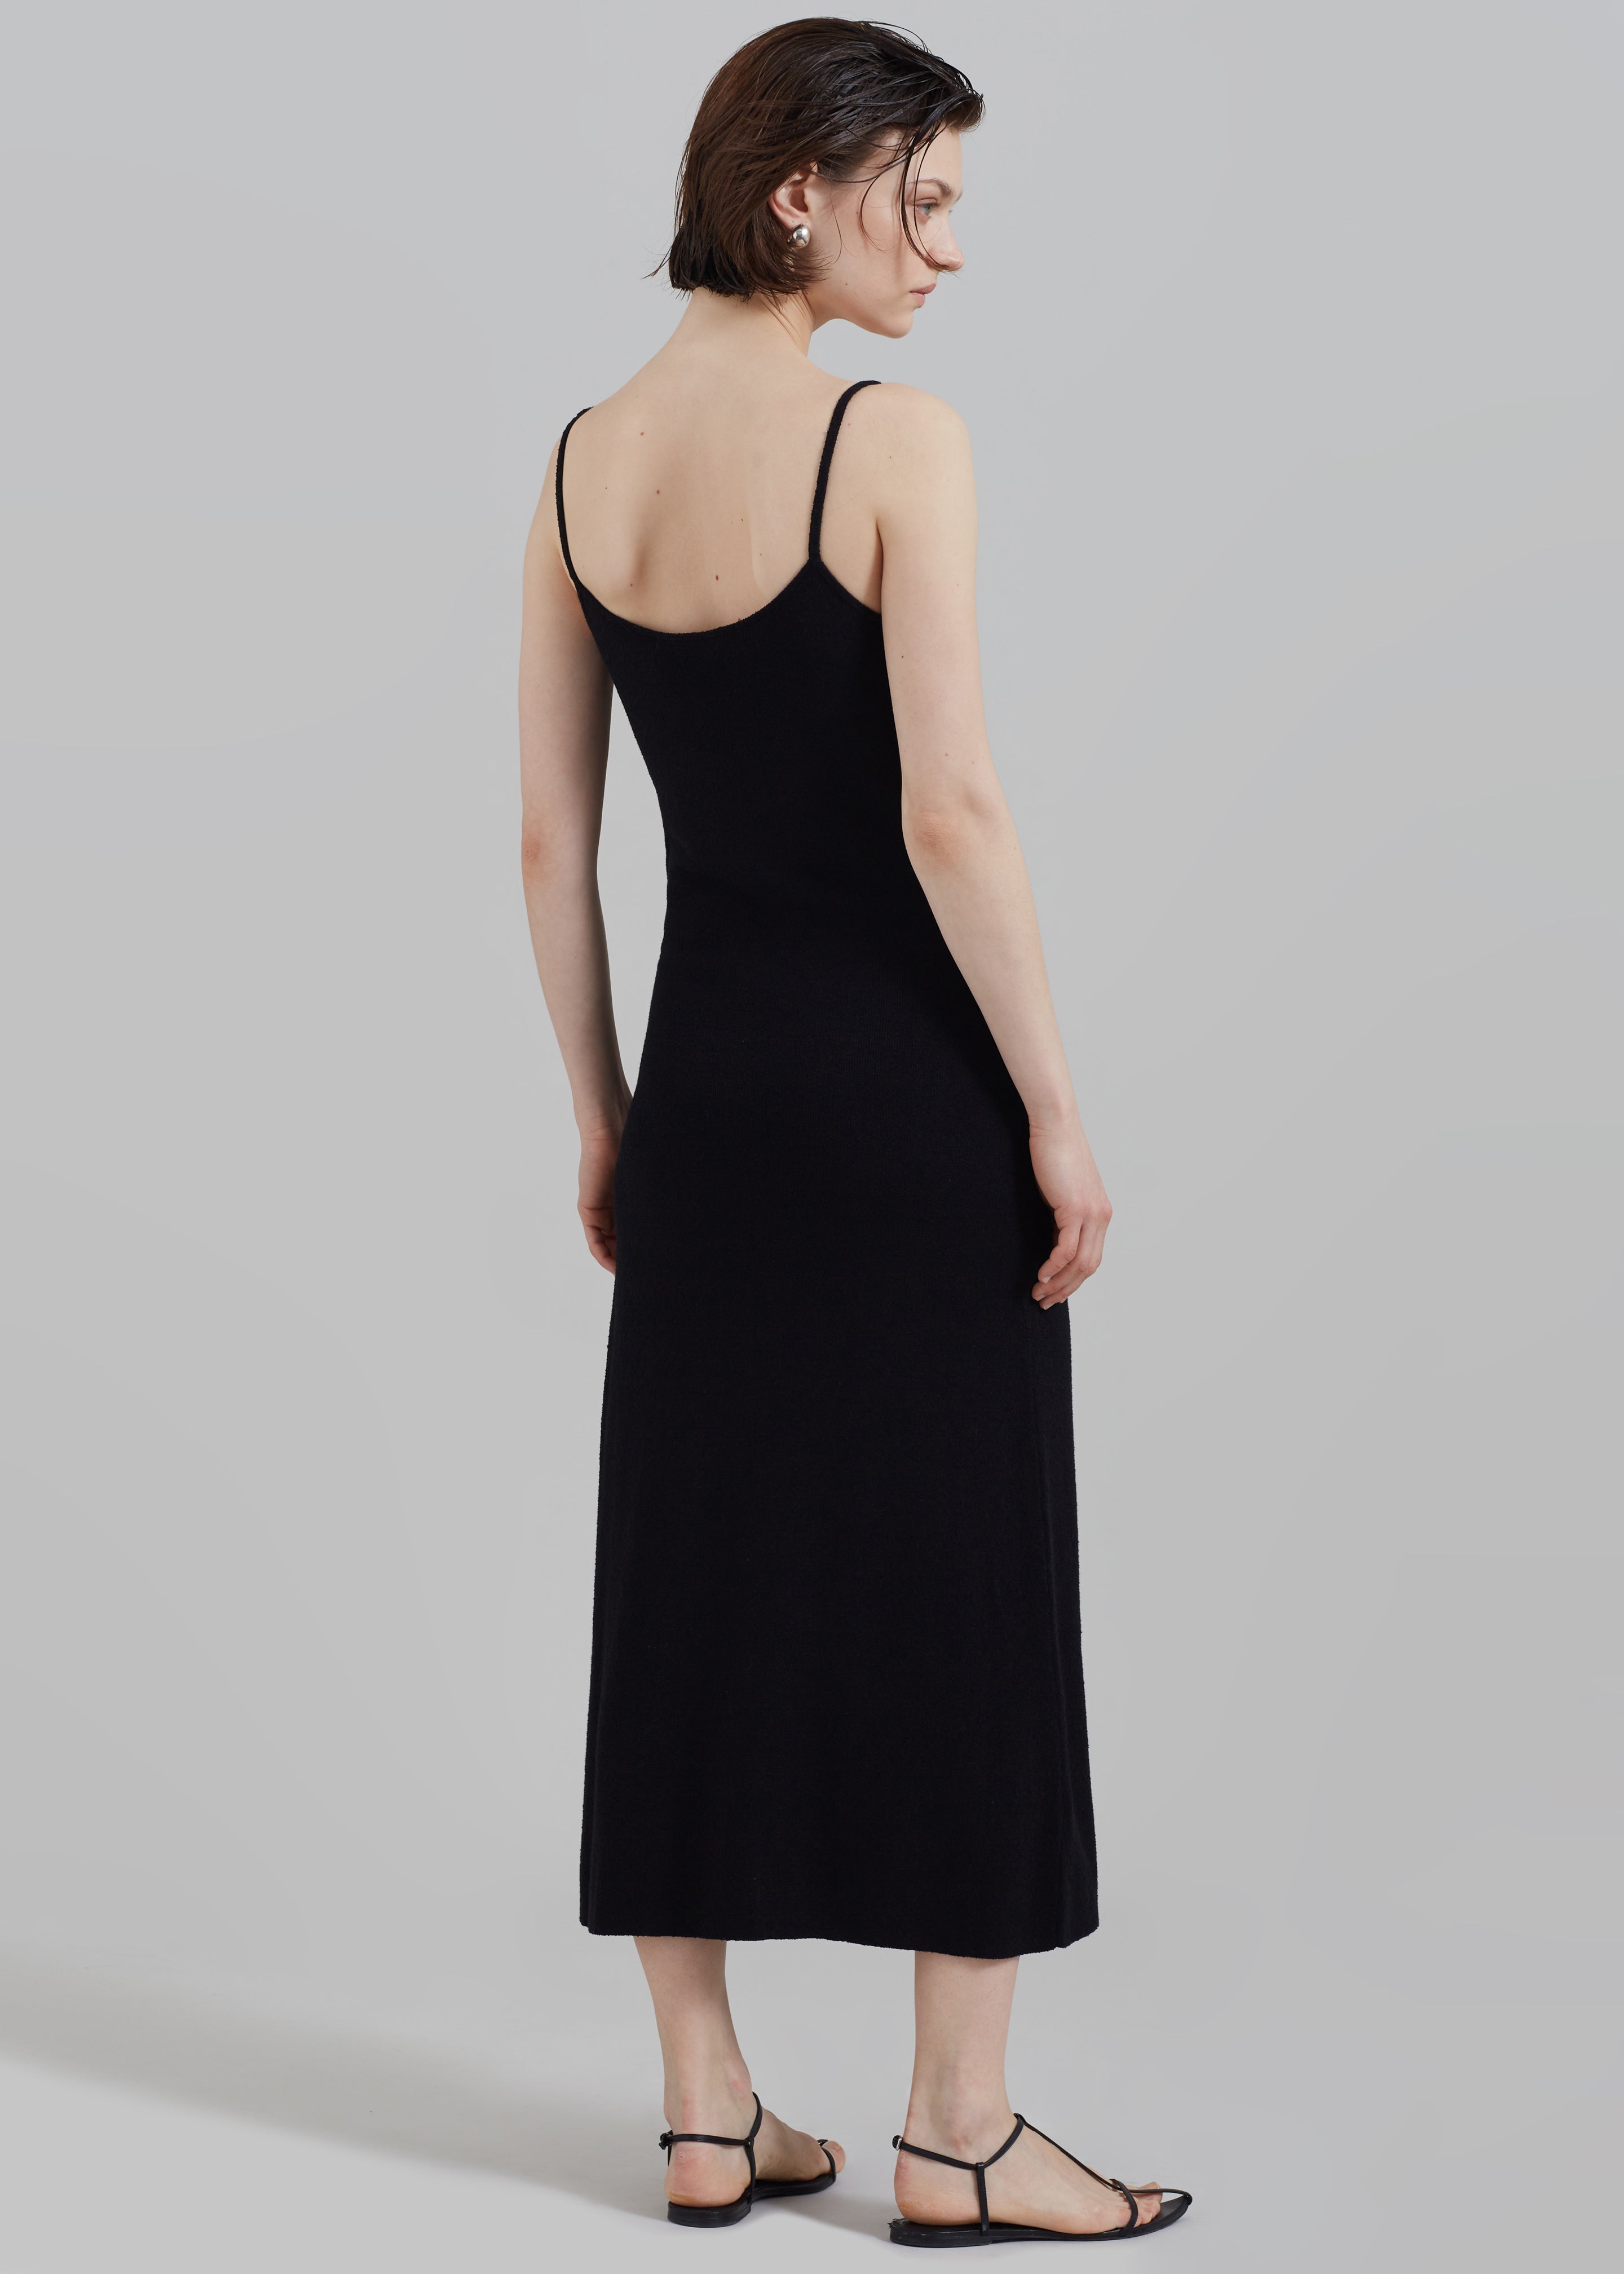 Proenza Schouler White Label Astrid Dress In Boucle Viscose - Black - 6